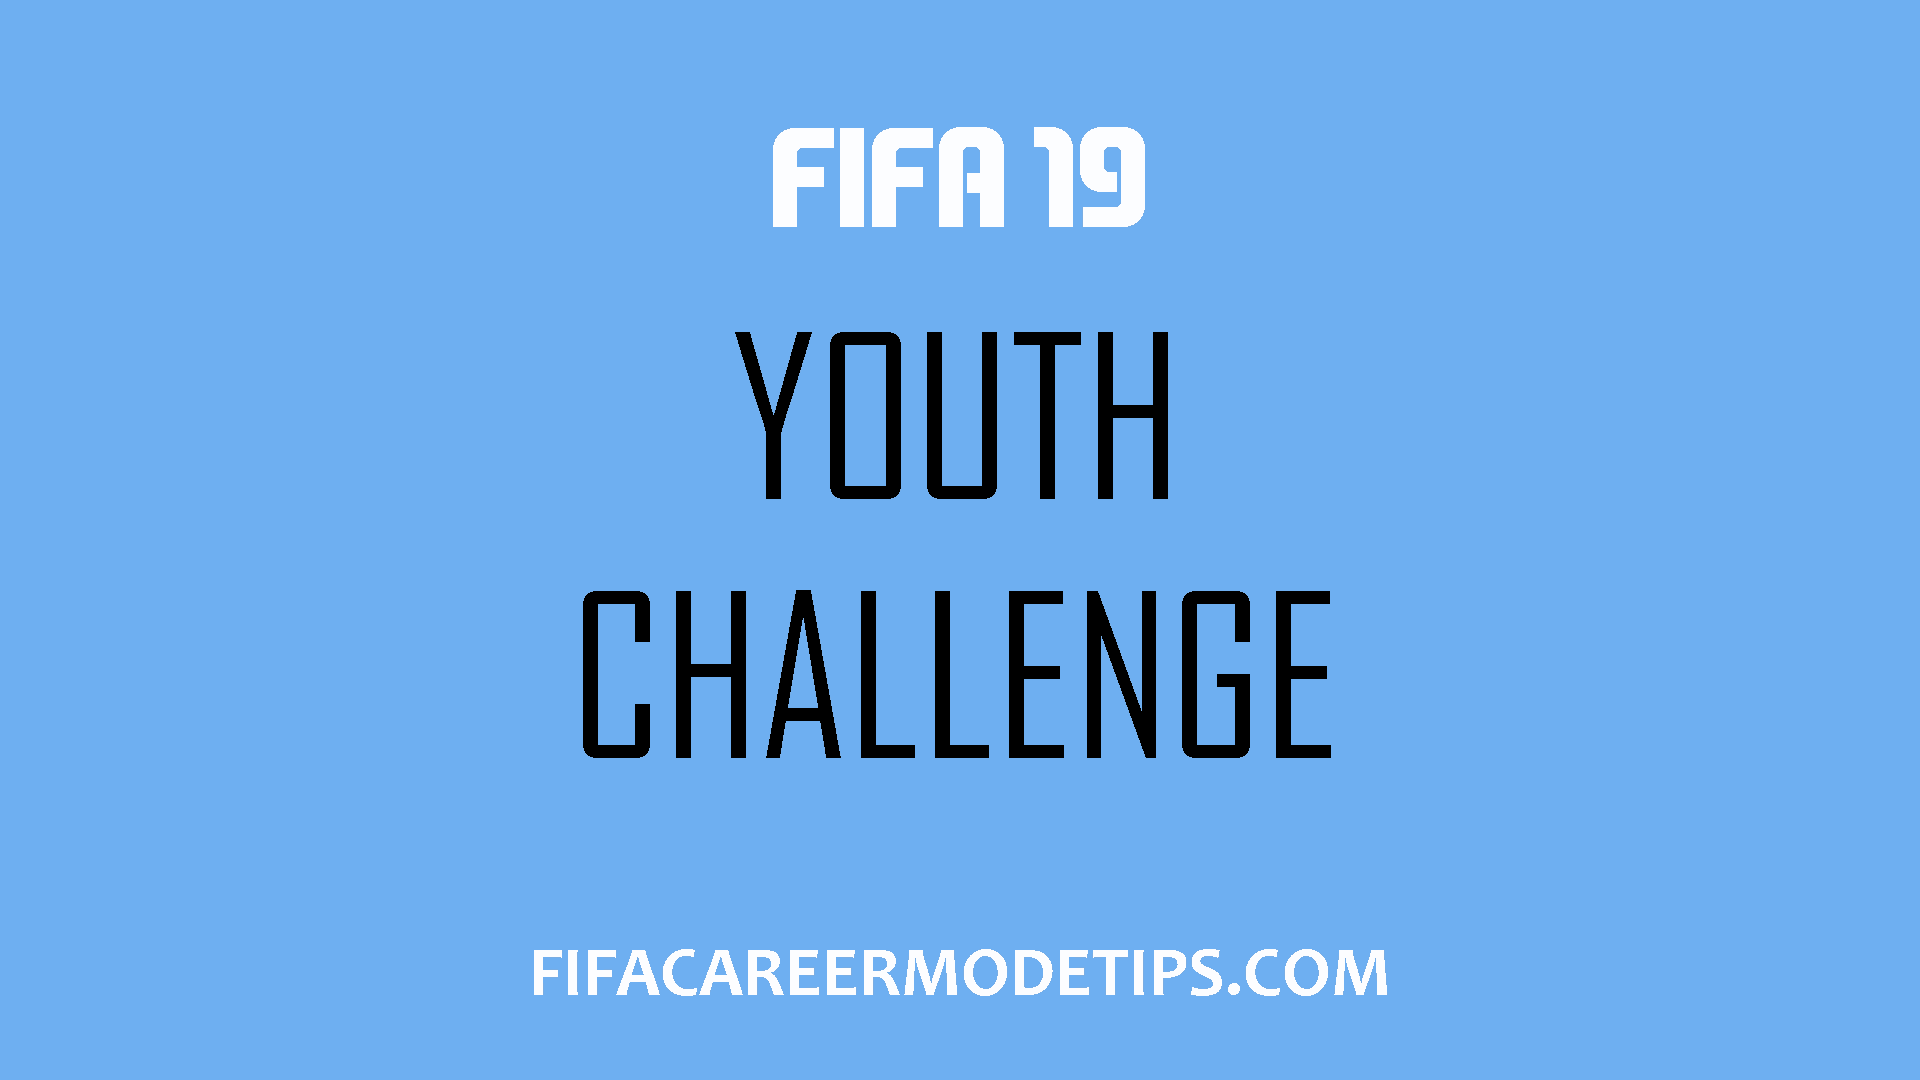 FIFA Youth Challenge